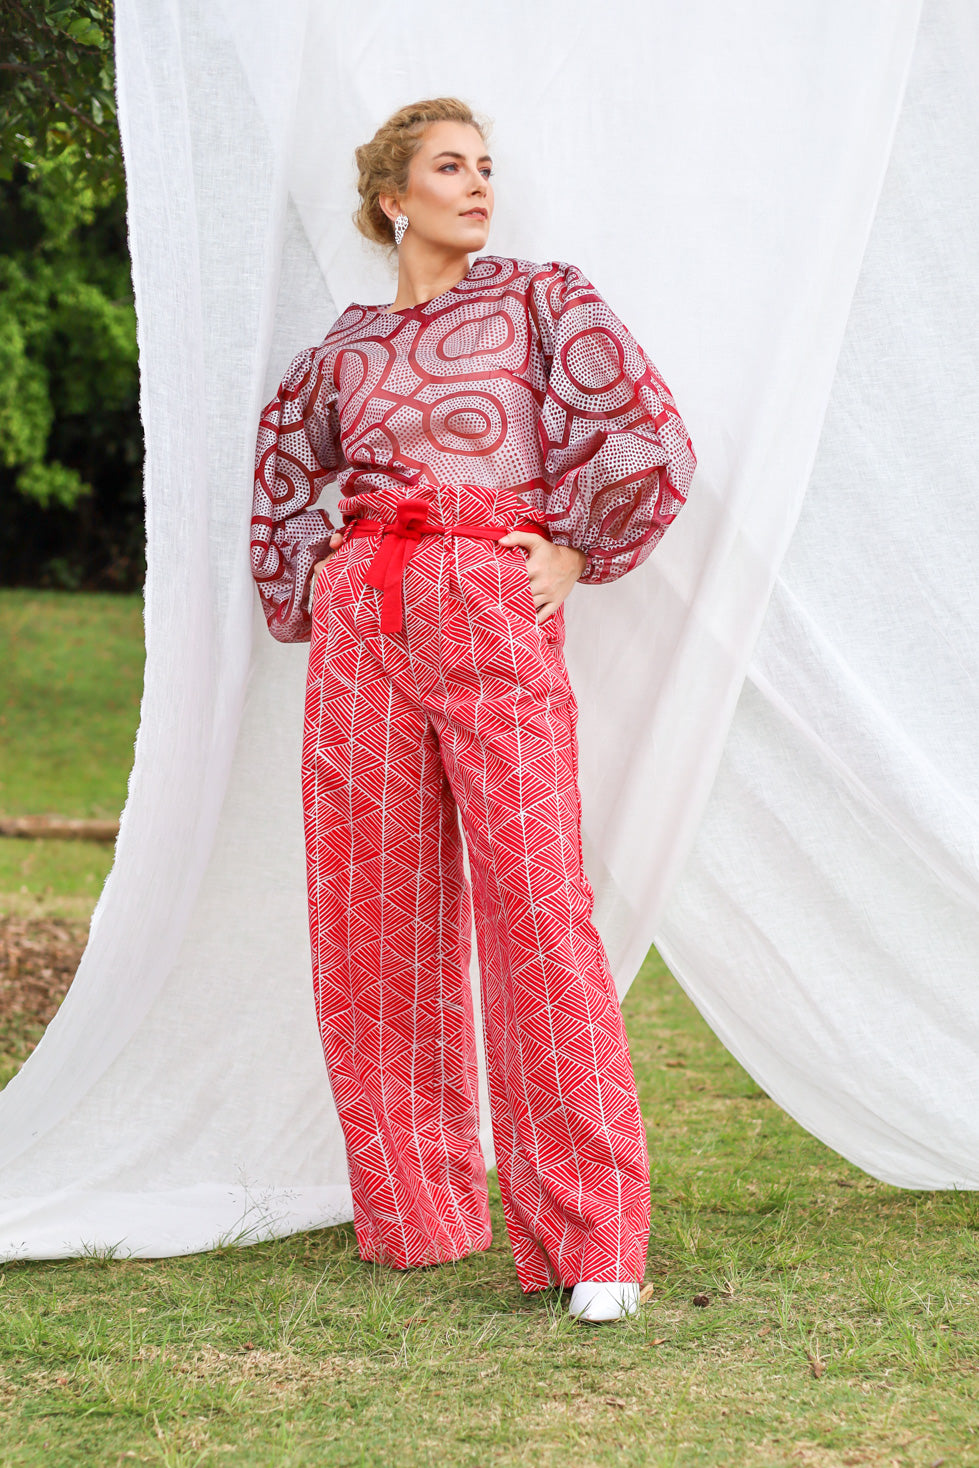 GLORY by Tiwi Design x Ossom Kulama Puff Sleeve Top in Silk